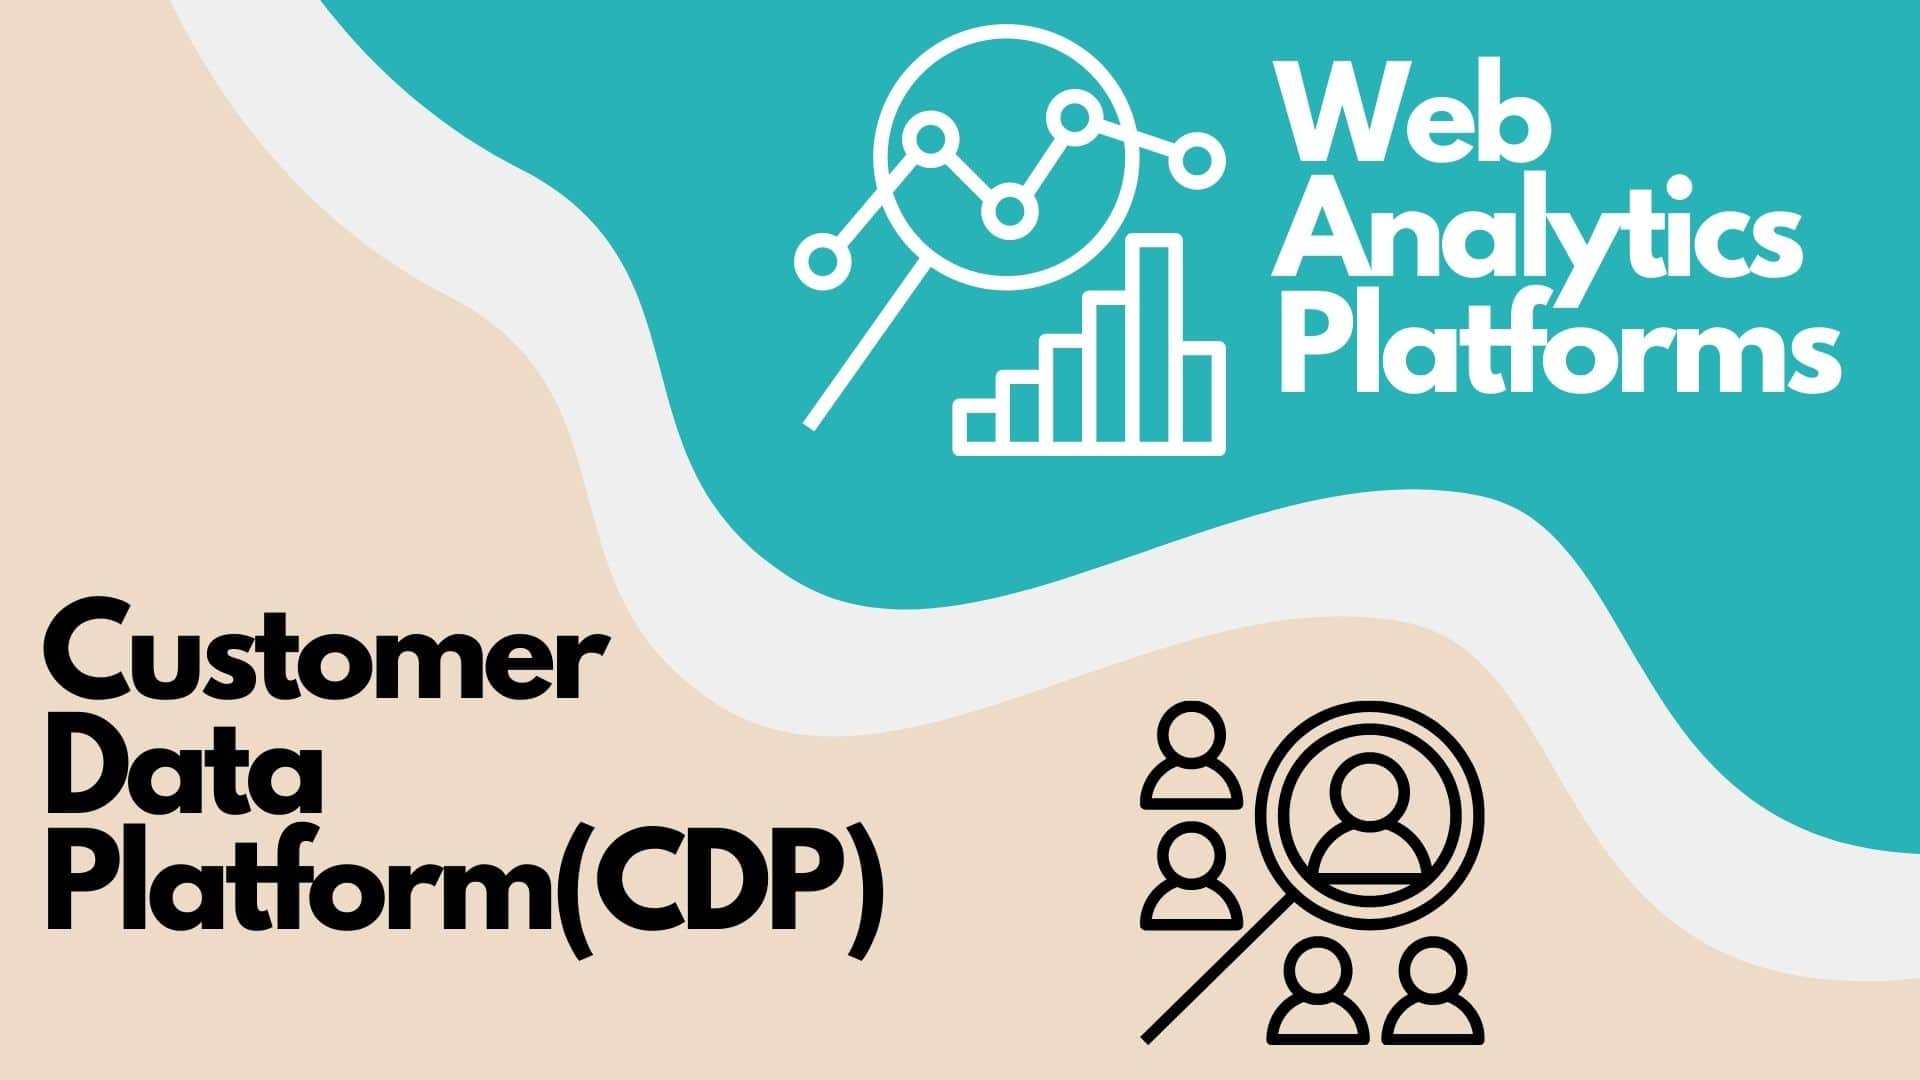 customer data platform vs web analytics platform curiousowl